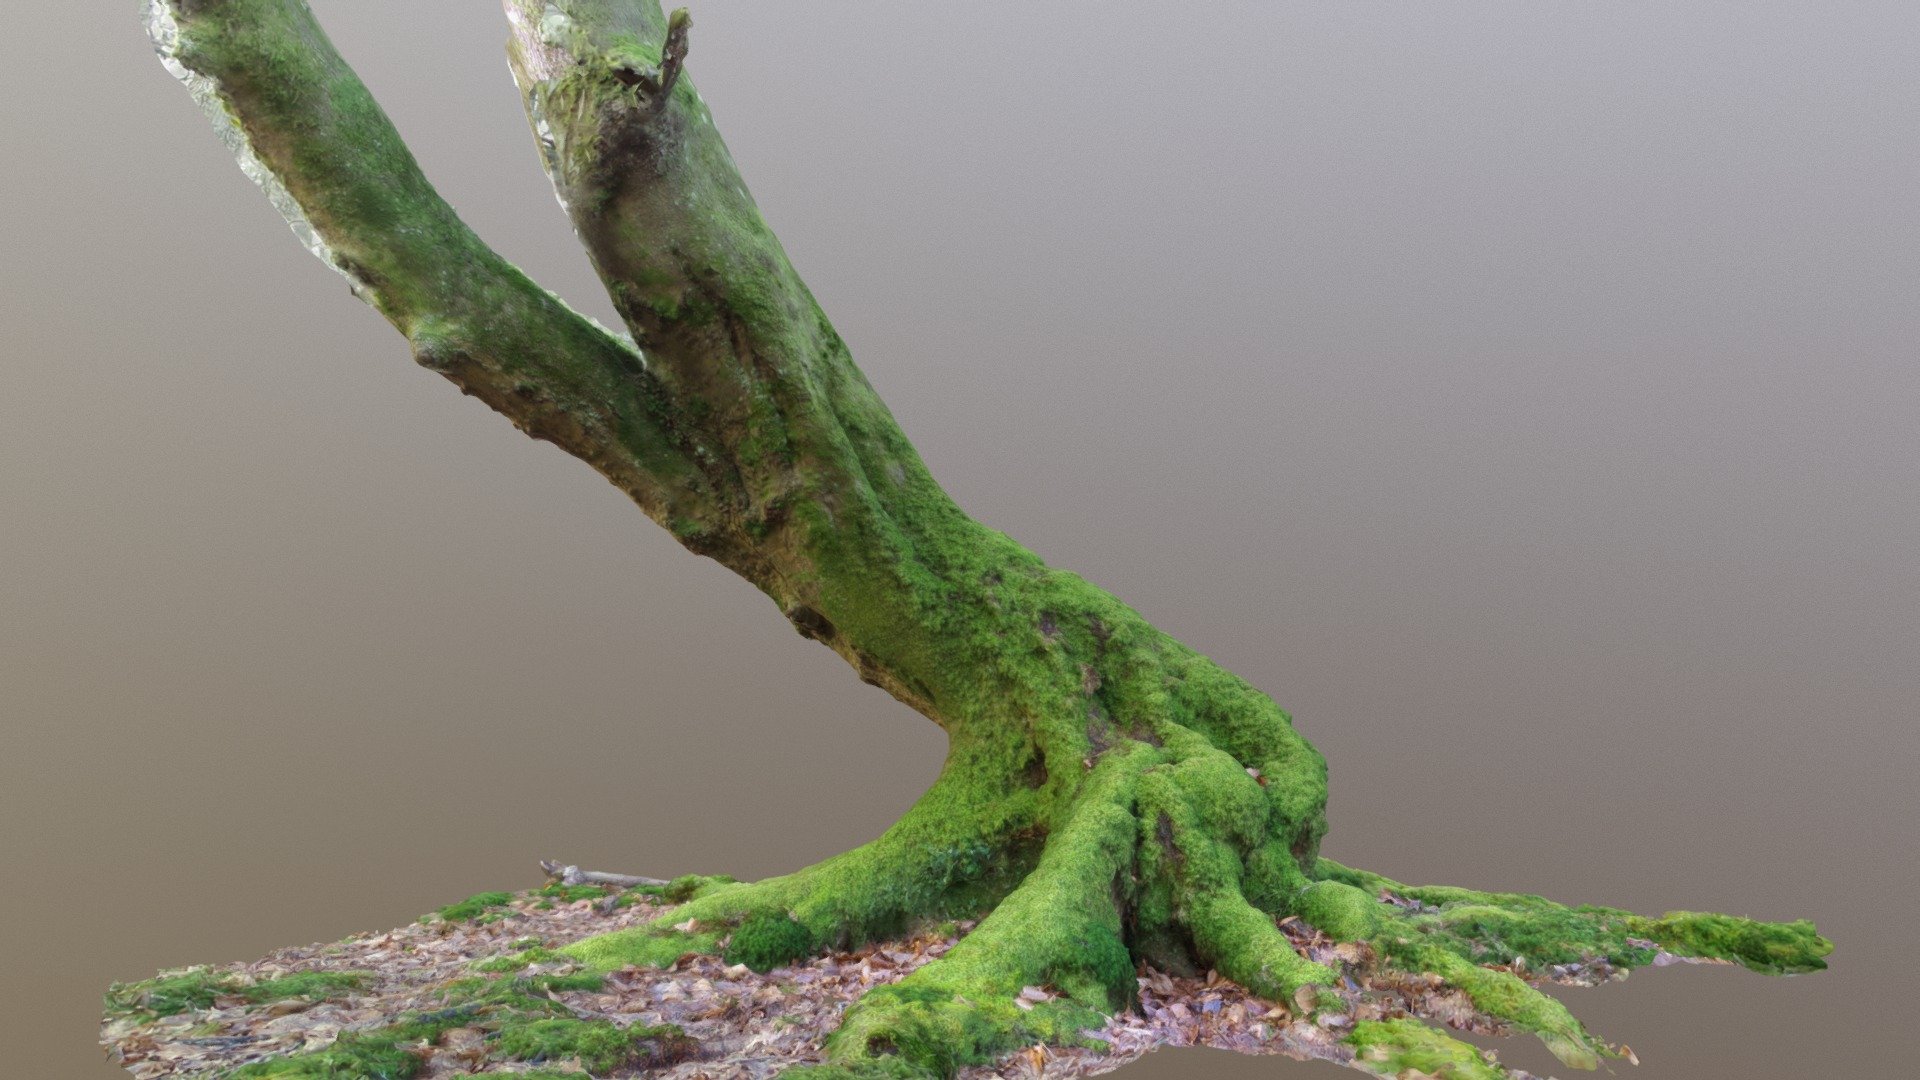 Mossy mystical looking curvy beech tree, photogrammetried in the New Forest, UK 2018 - Curvy Mossy Beech Tree - Buy Royalty Free 3D model by Jasper Cousins (@jazzcousins) 3d model